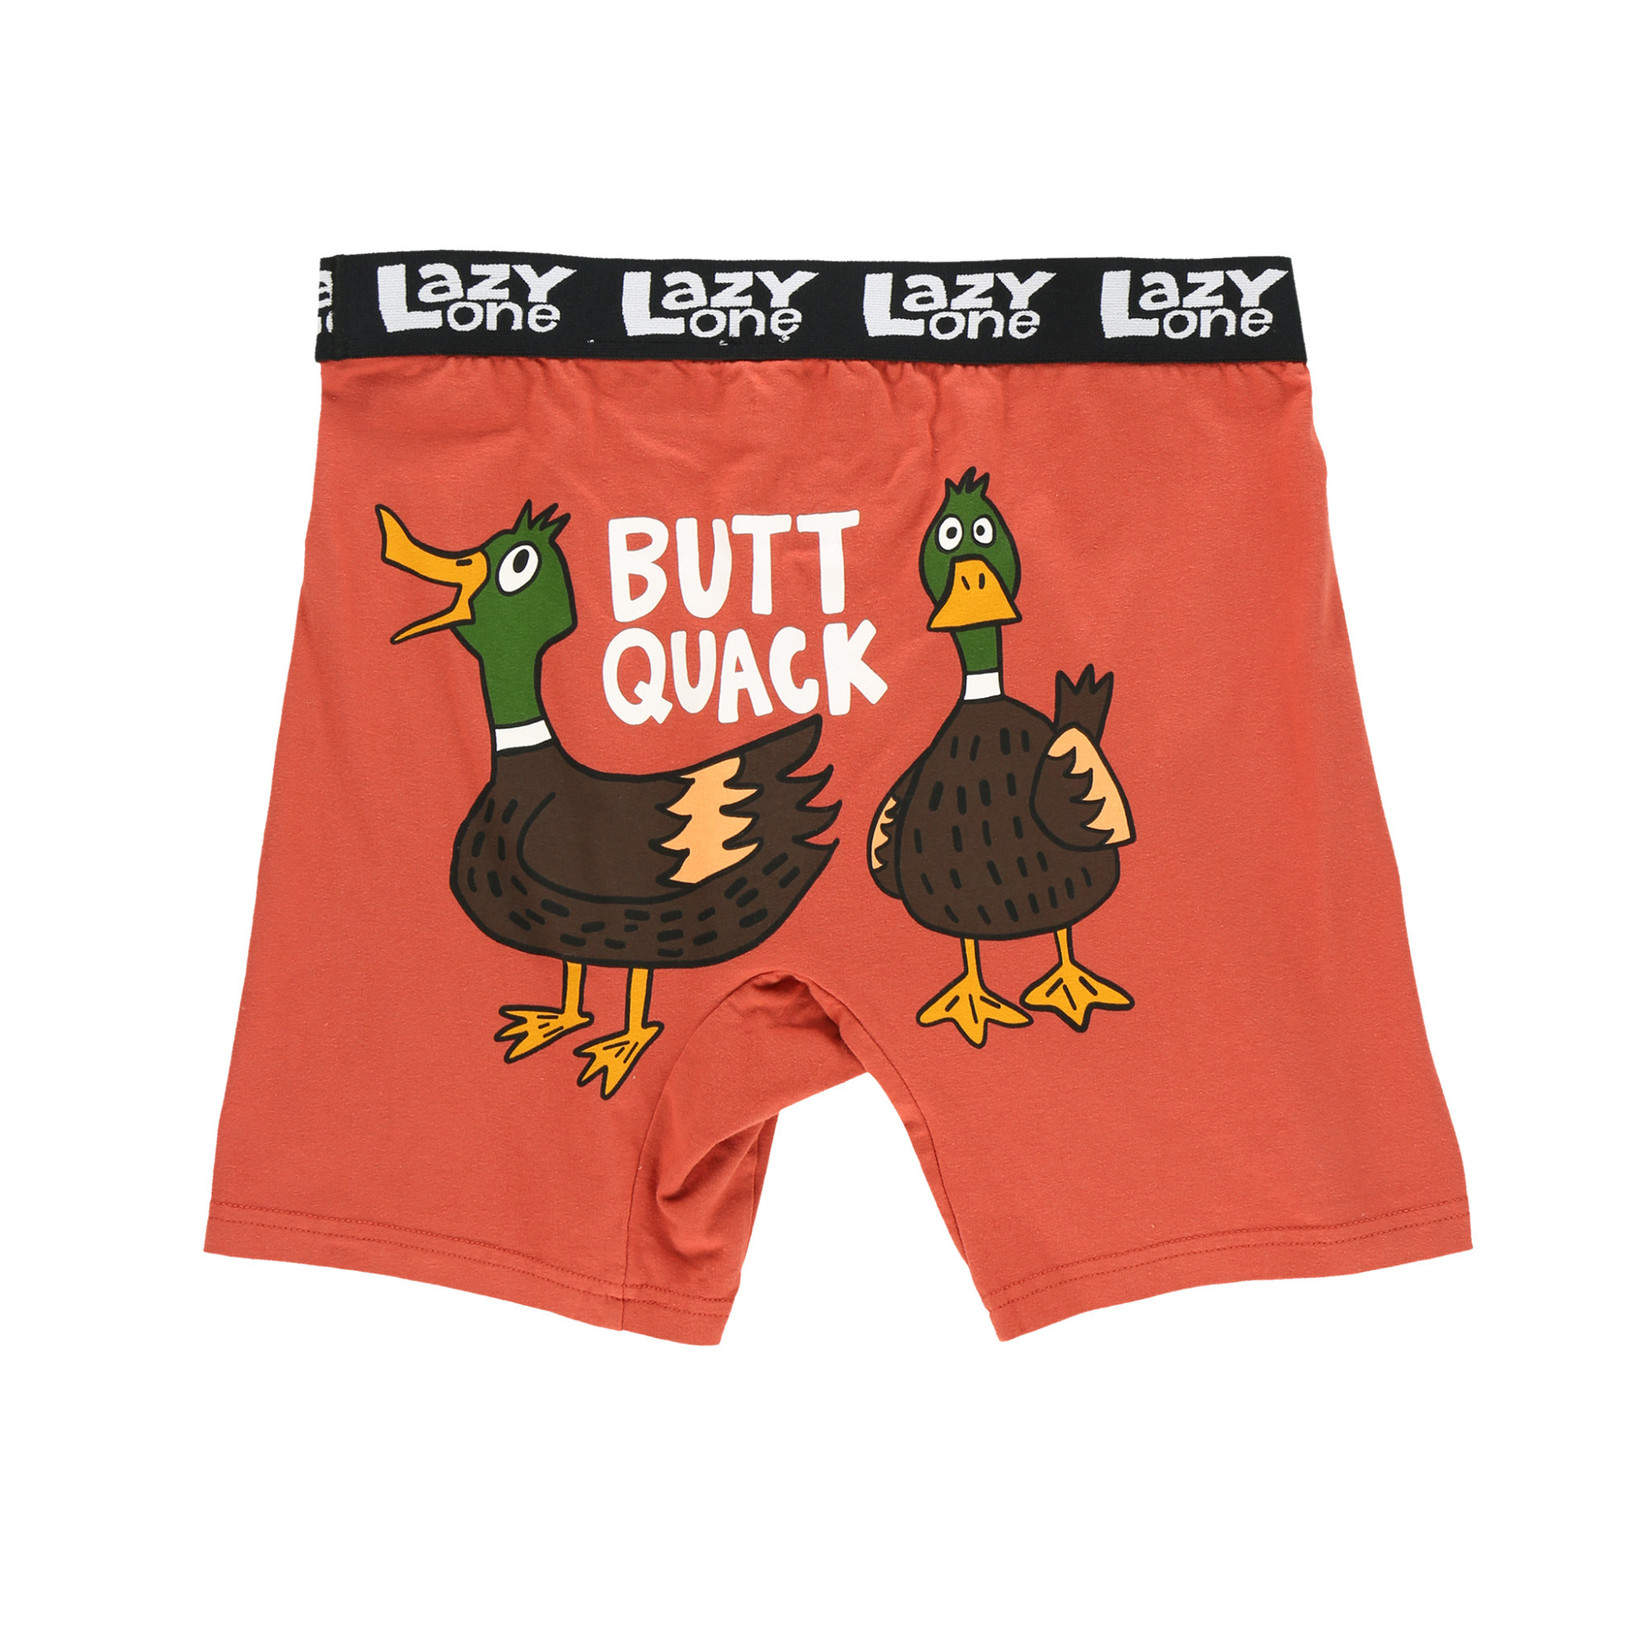 Lazy One Butt Quack Boxer Brief: